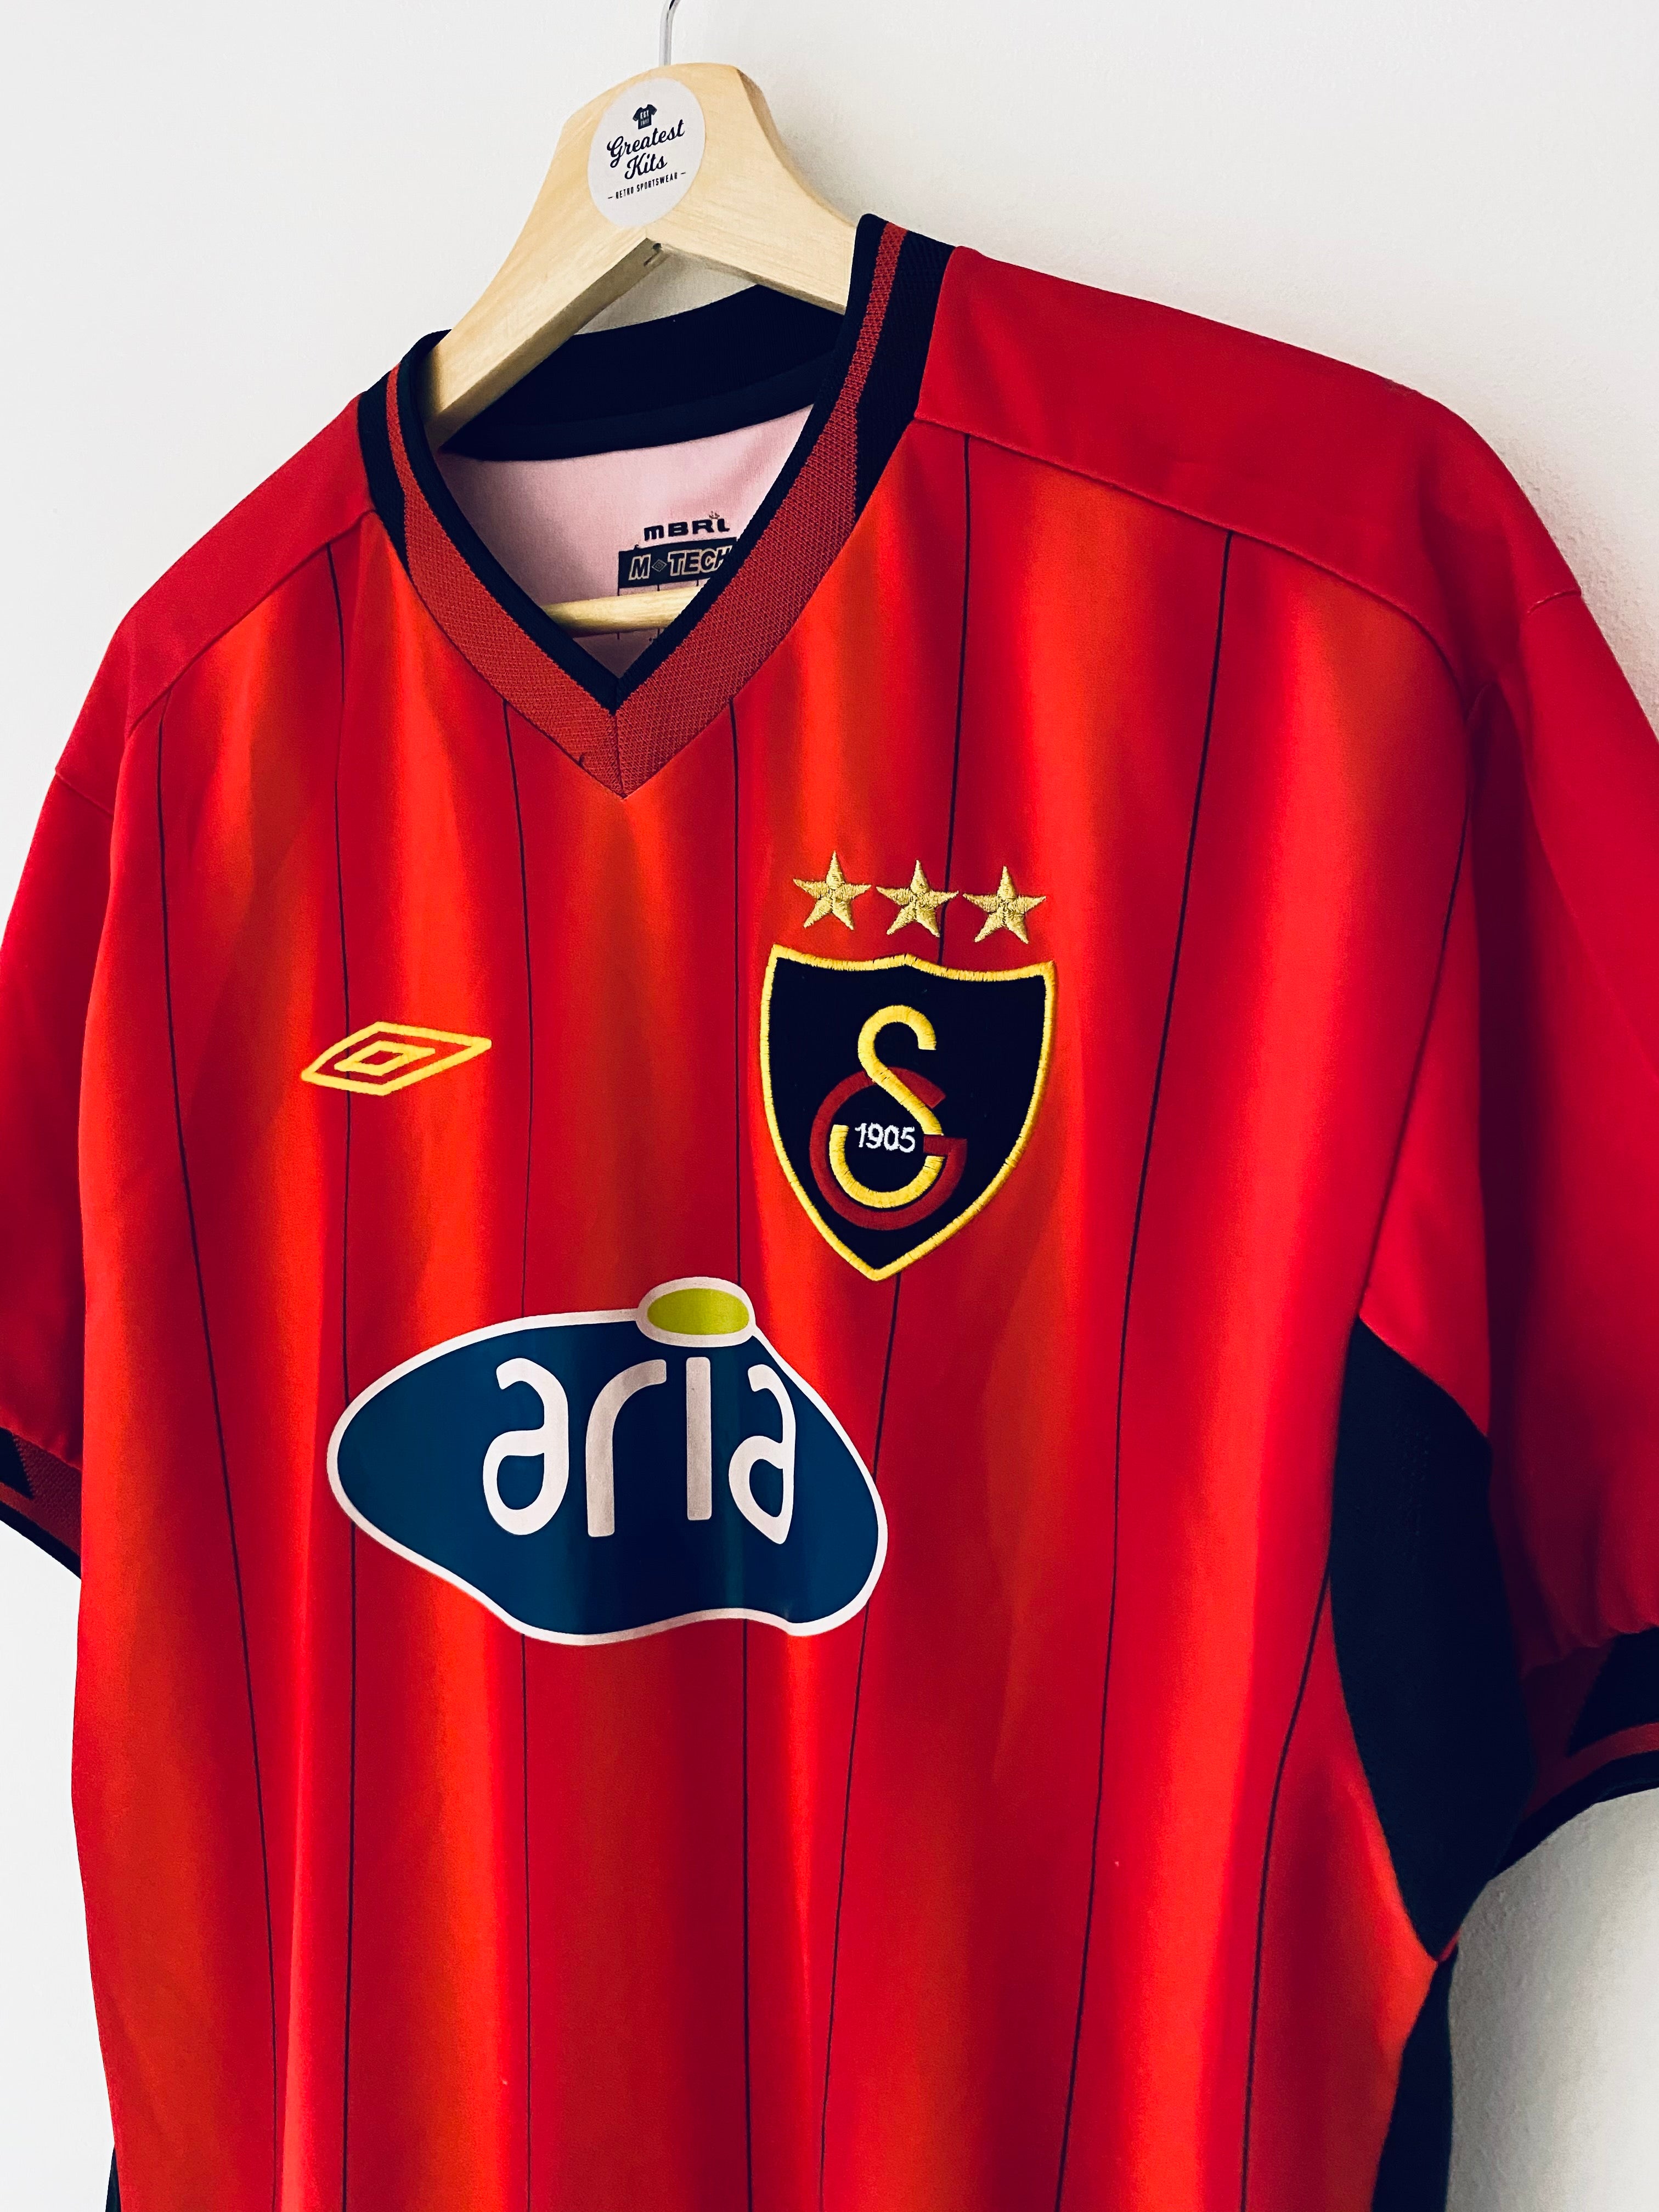 2003/04 Galatasaray Third Shirt (S) 8.5/10